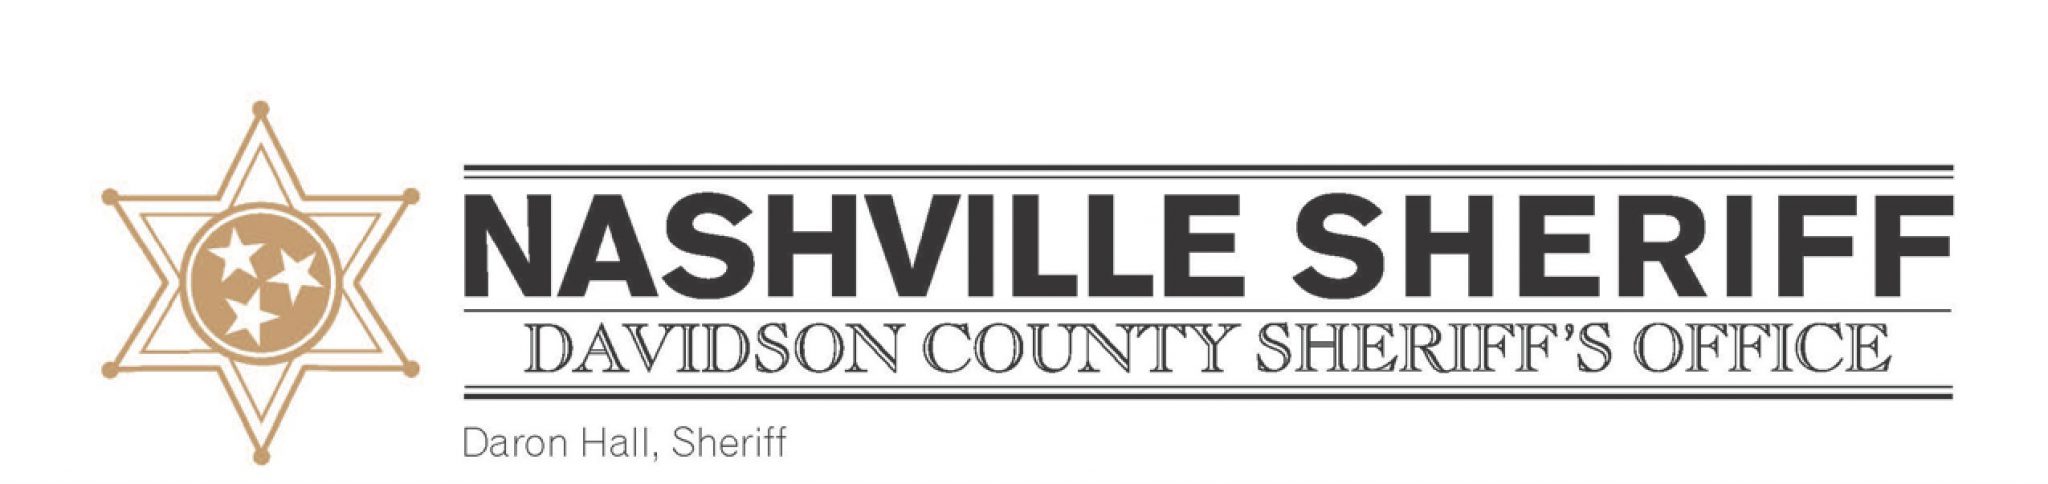 Former Sheriffs Office Correctional Officer Charged Davidson County Sheriff Nashville